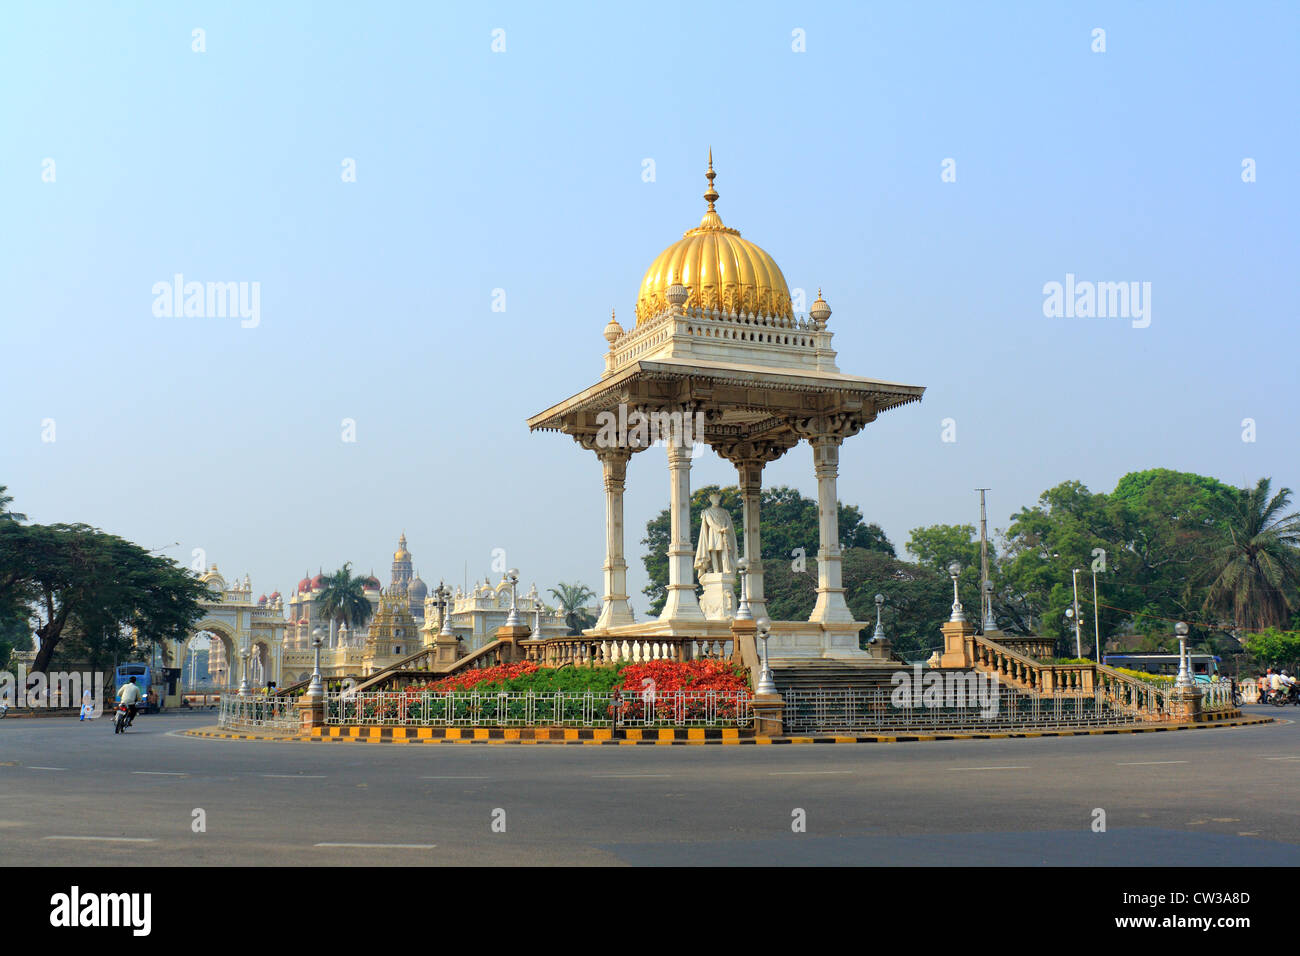 Una statua del Maharaja Krishnaraja Wodeyar al centro di una rotatoria a Mysore, con Mysore Palace in background. Foto Stock